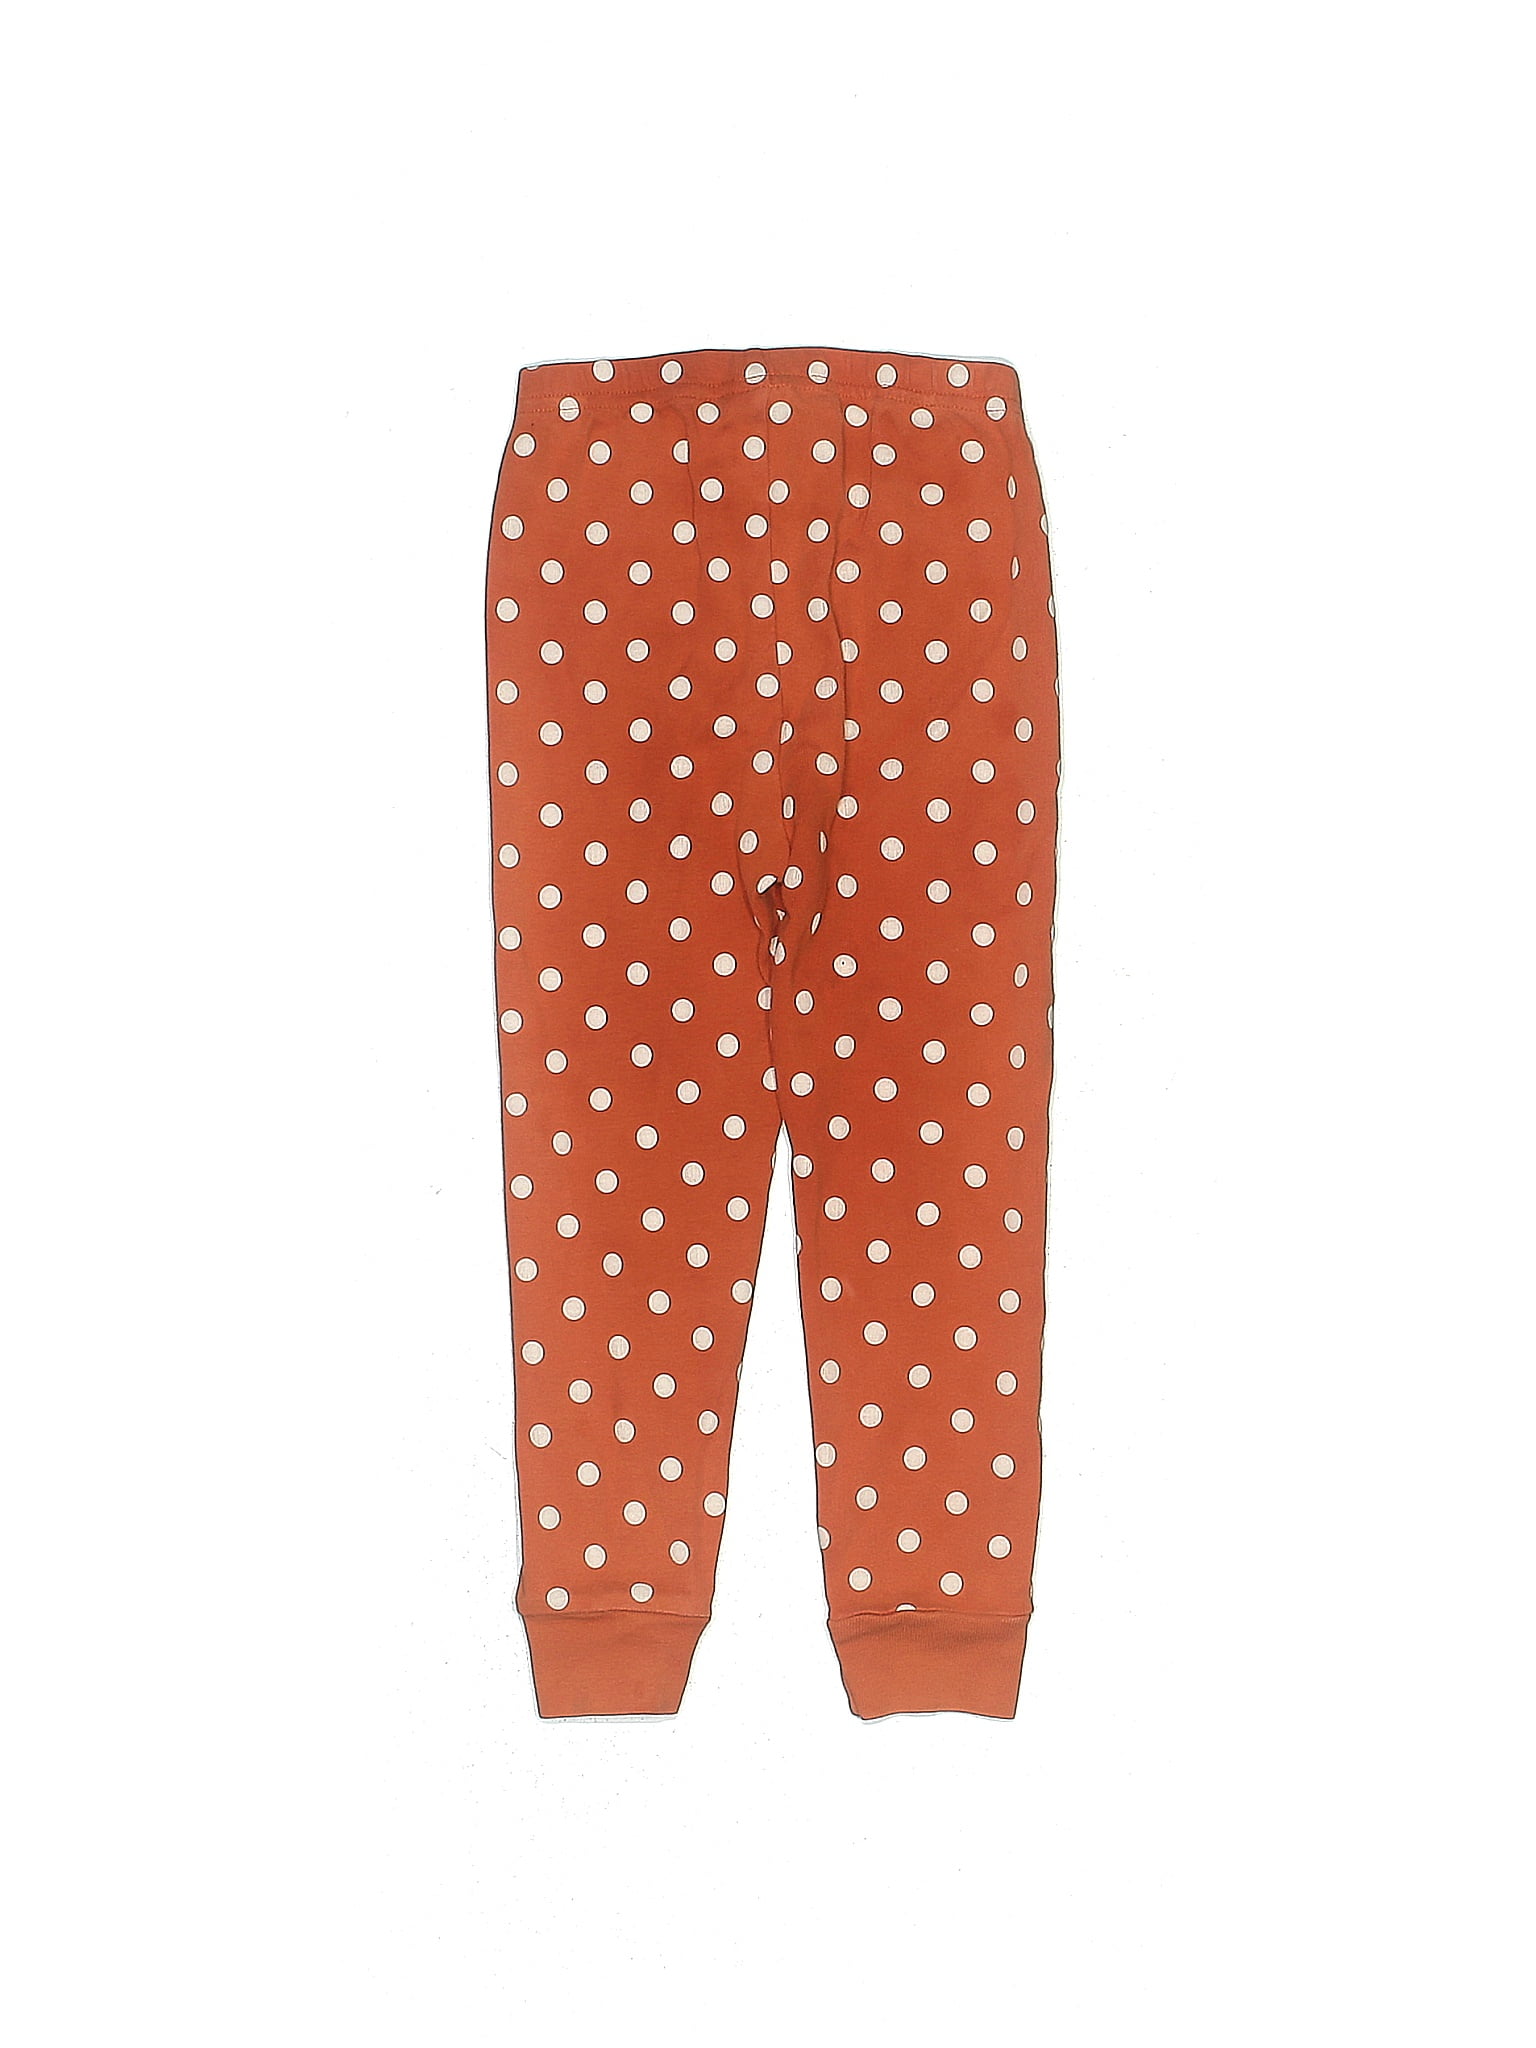 Gymboree 100% Cotton Polka Dots Orange Leggings Size 3T - 61% off